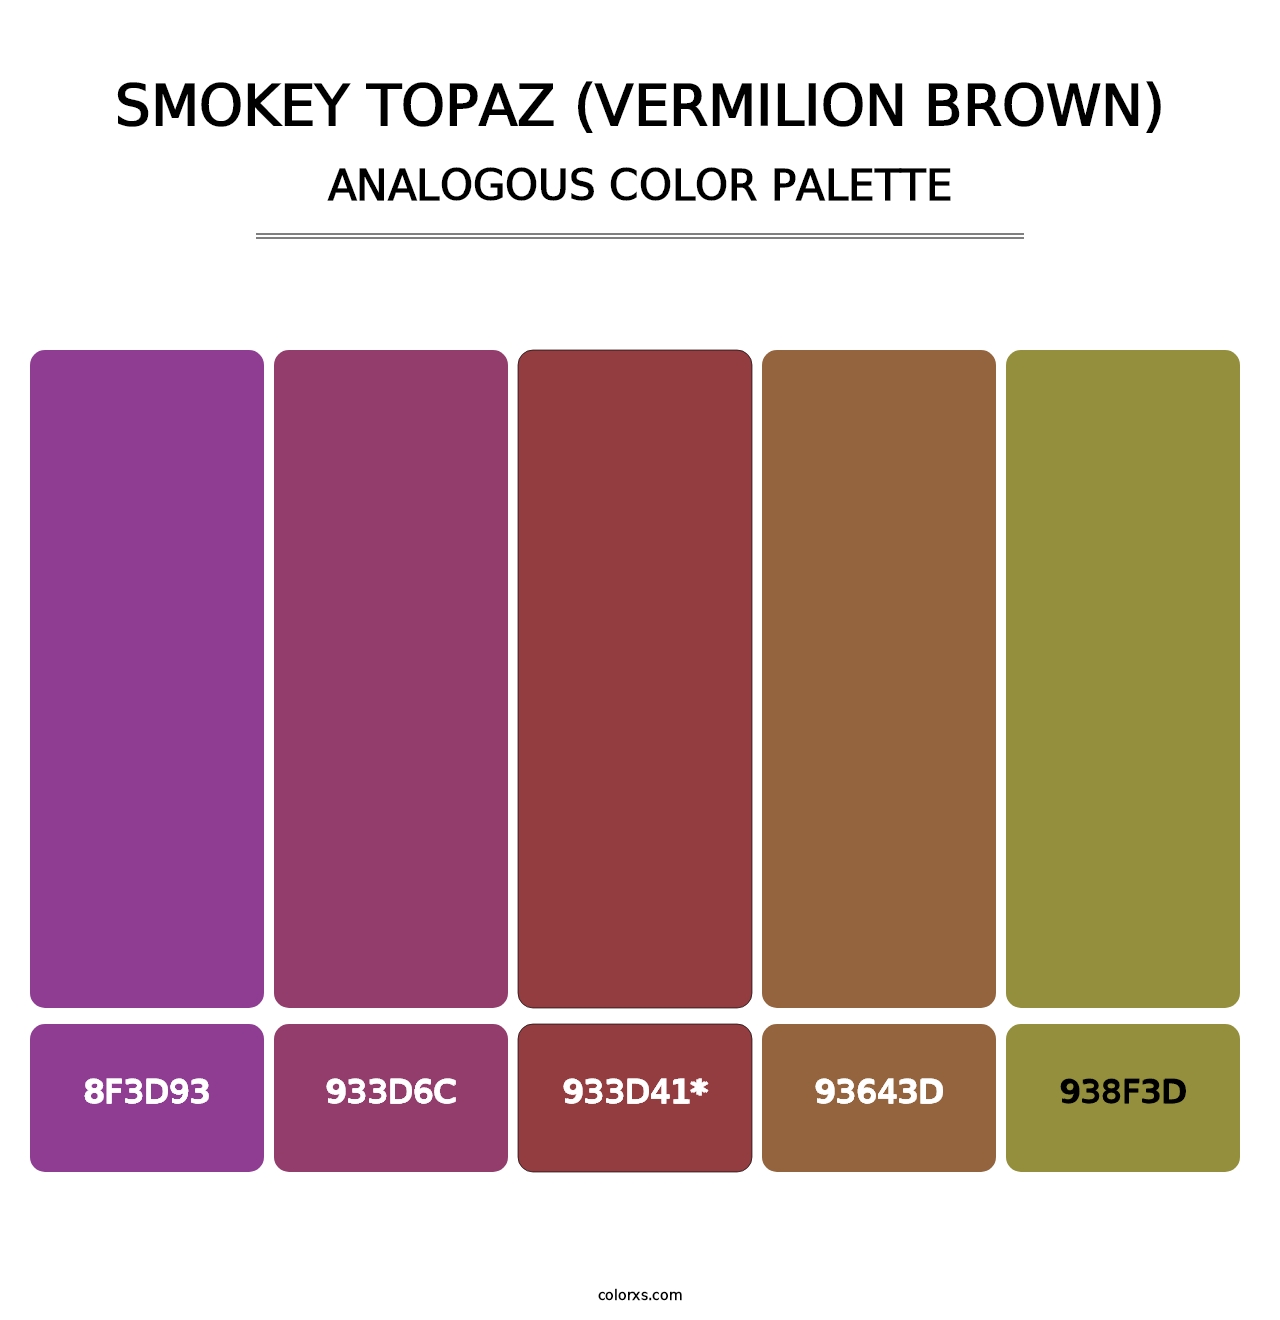 Smokey Topaz (Vermilion Brown) - Analogous Color Palette